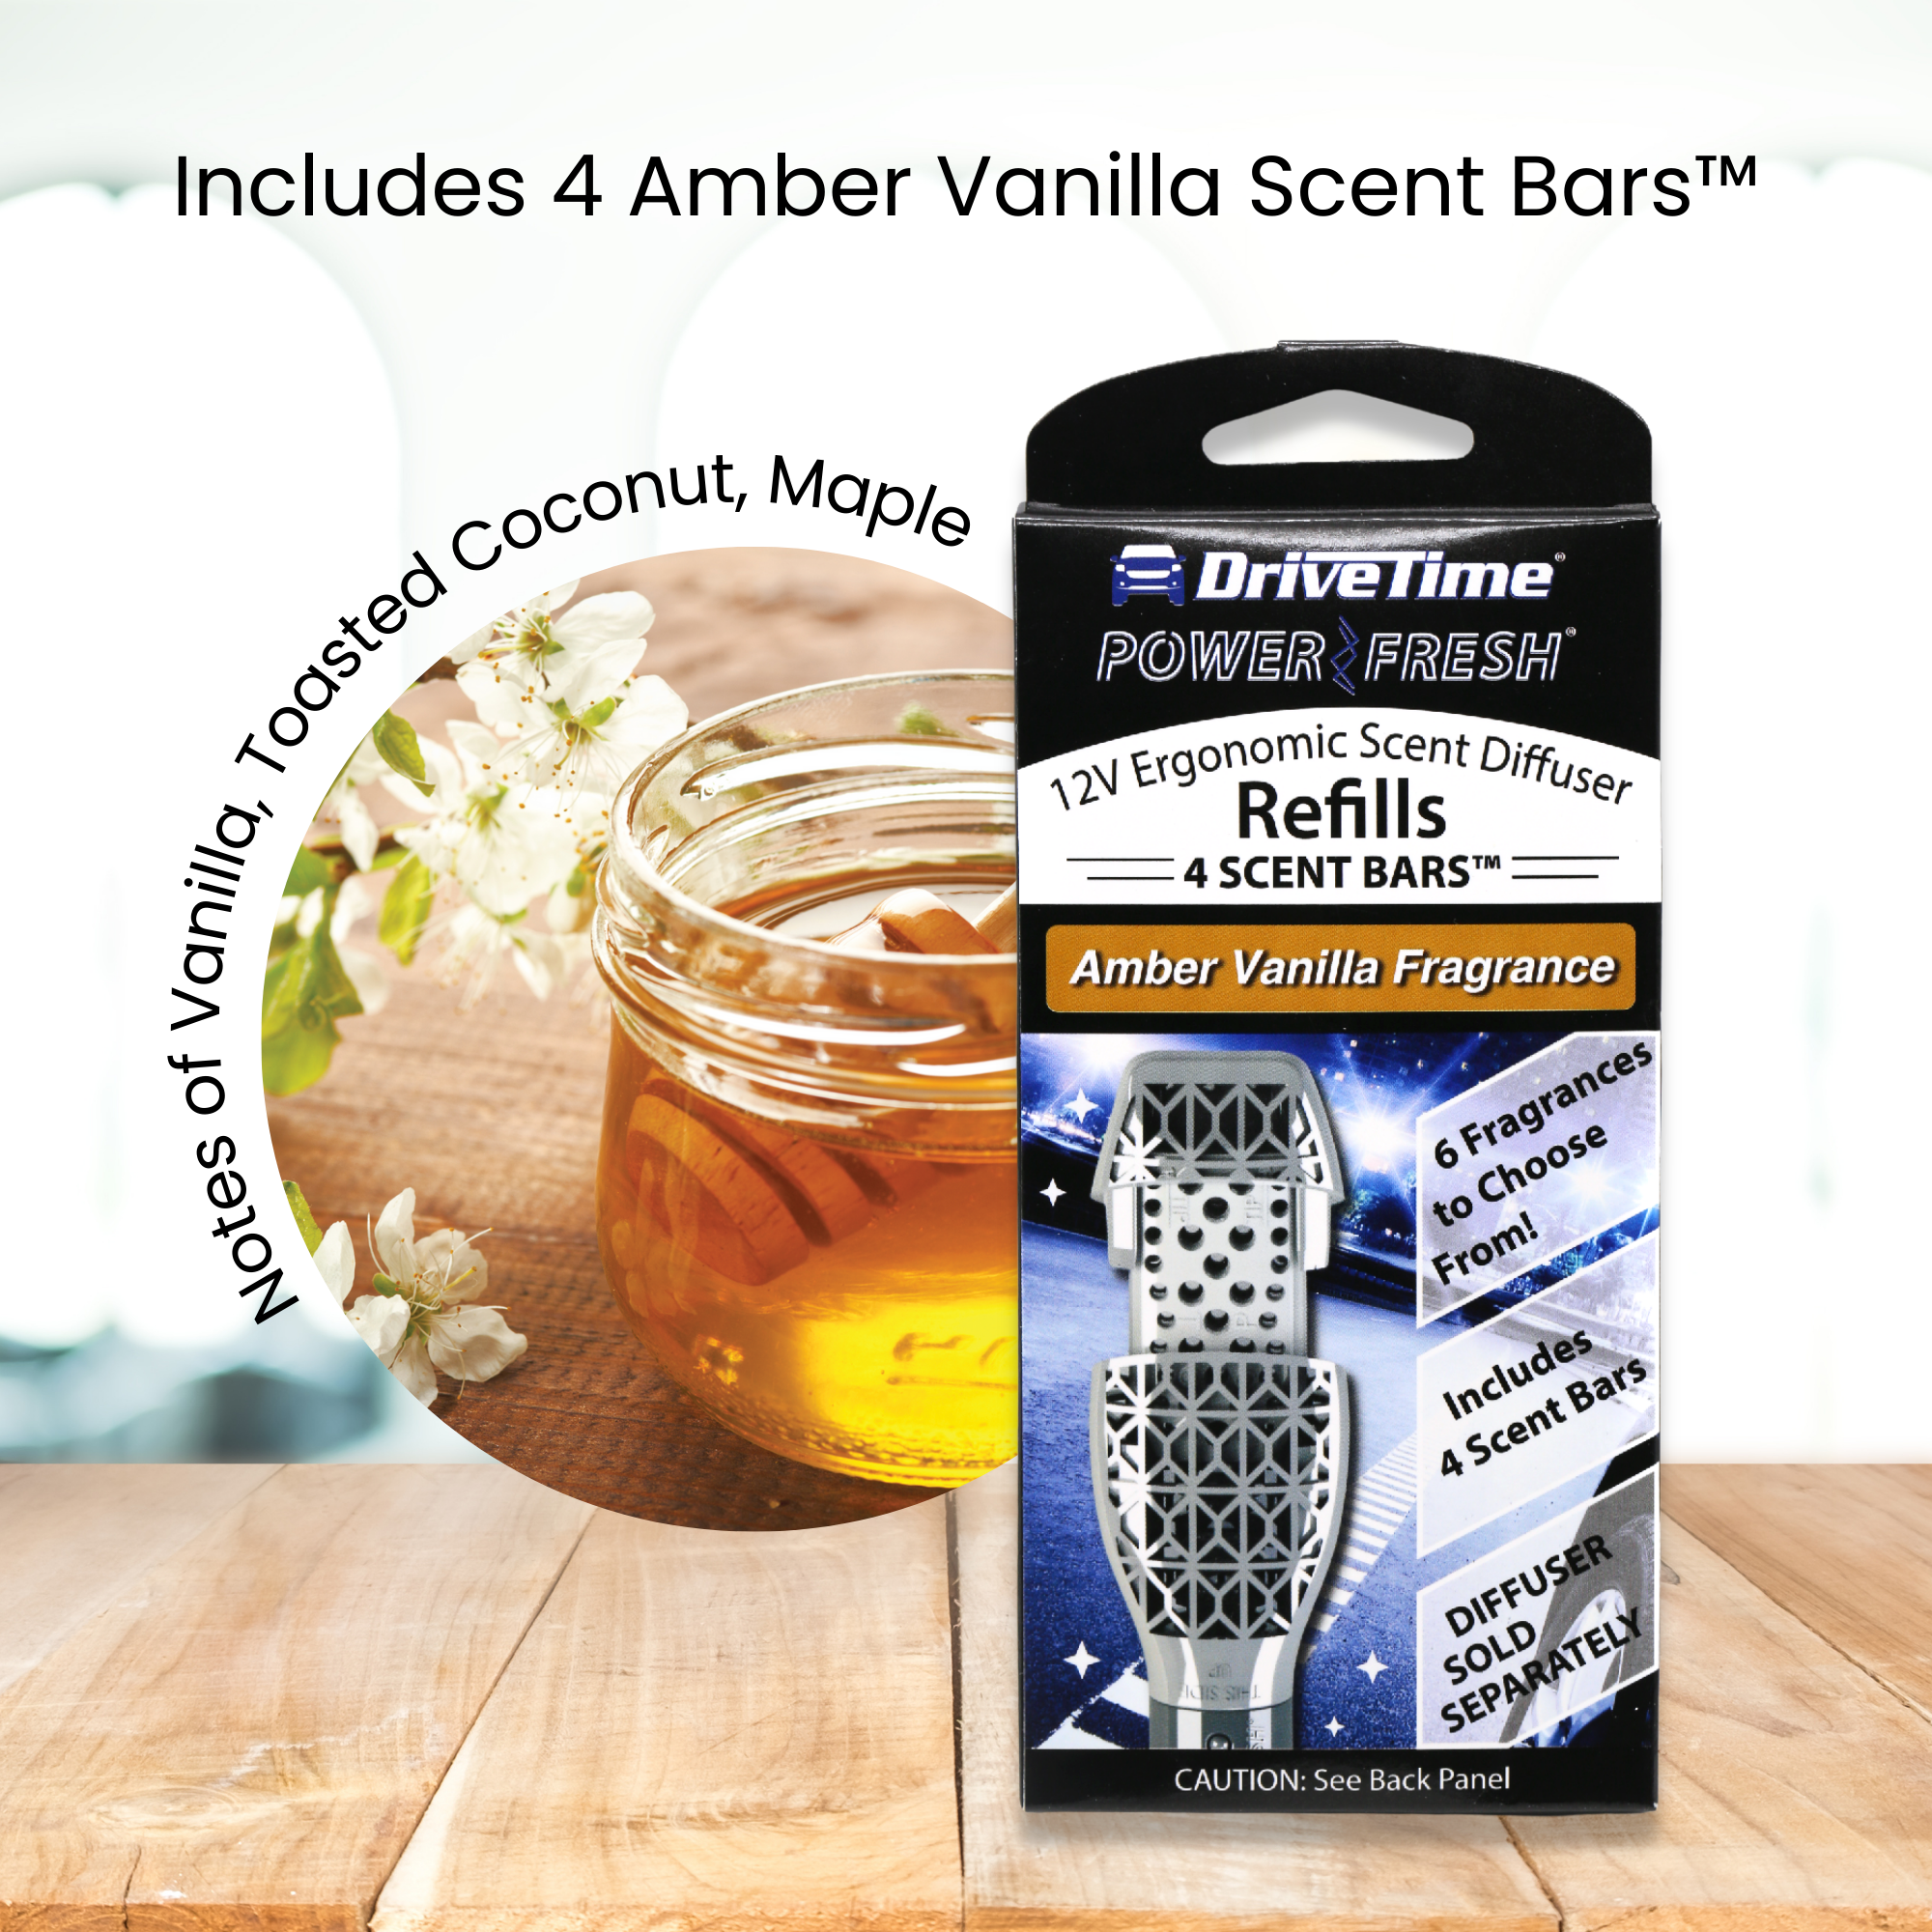 Power Fresh® 12-Volt Car Diffuser Air Freshener & Scent Bar Refills Amber Vanilla Scent Bar 4-Pack car fragrance